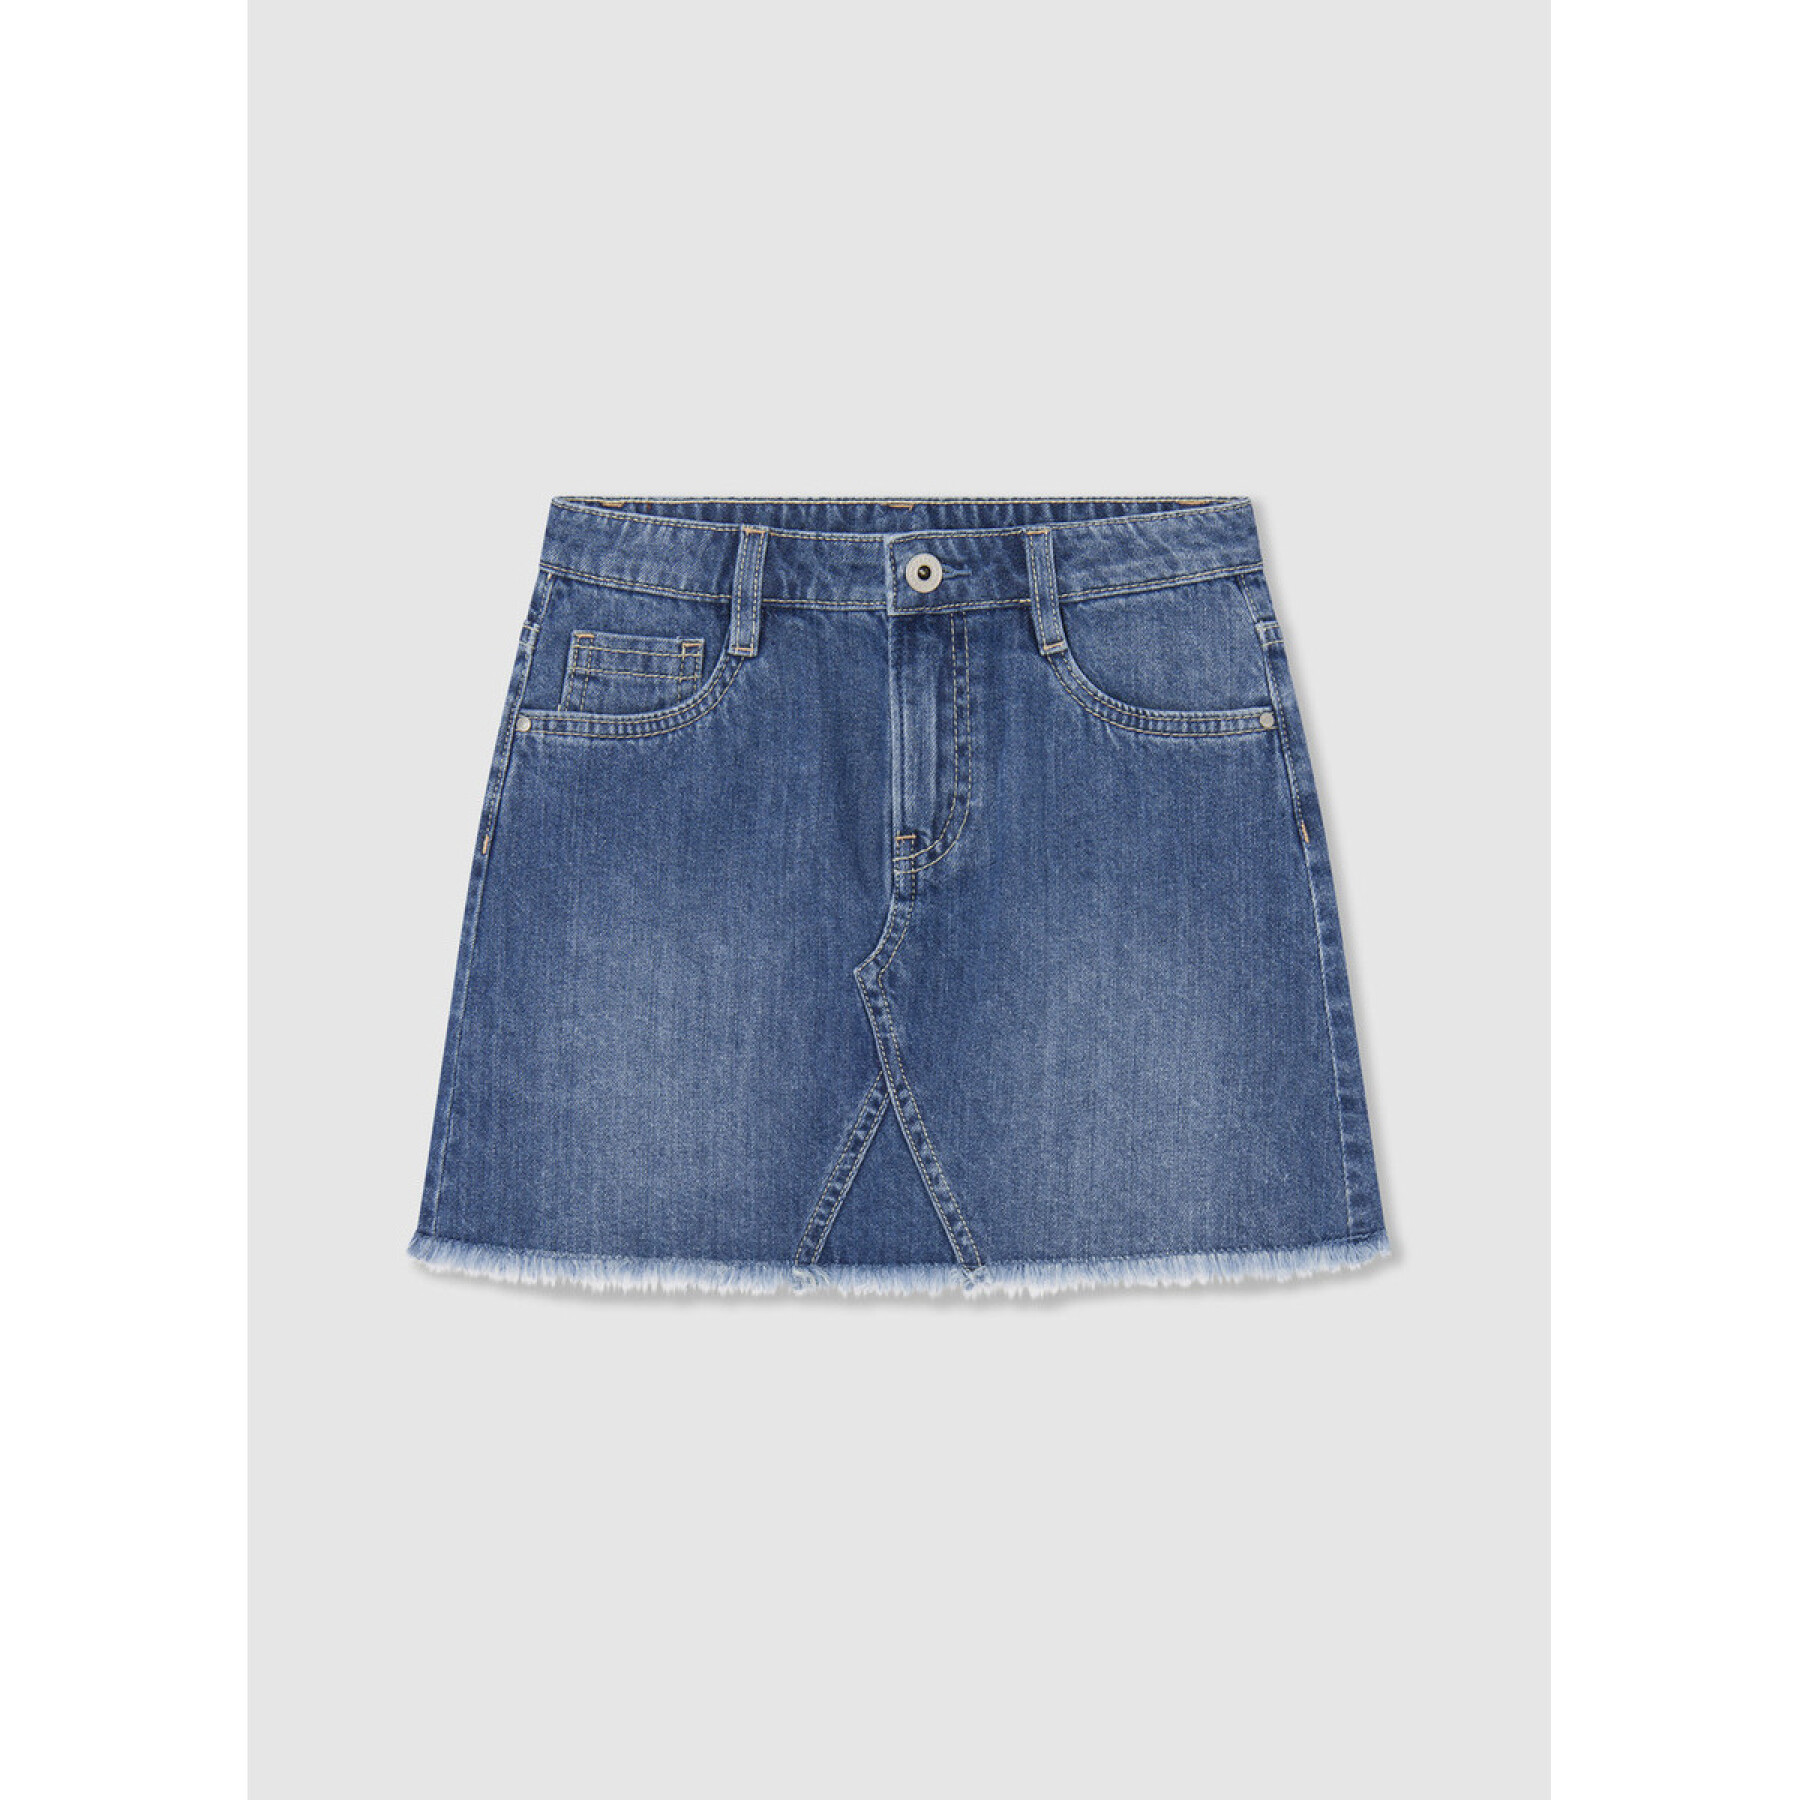 Mini skirt girl Pepe Jeans A-Line